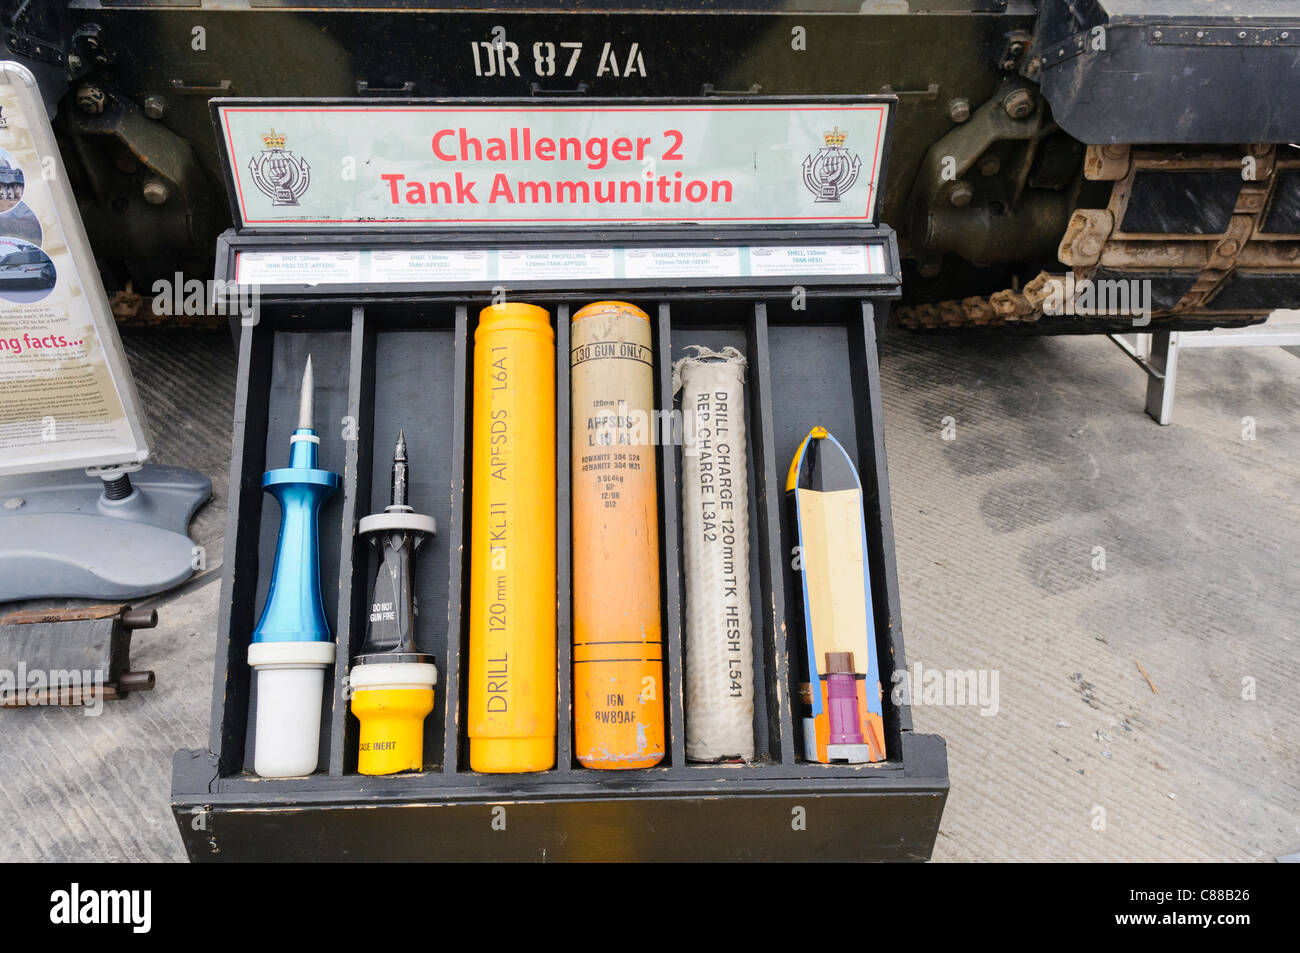 Challenger 2 tank ammunition Stock Photo - Alamy